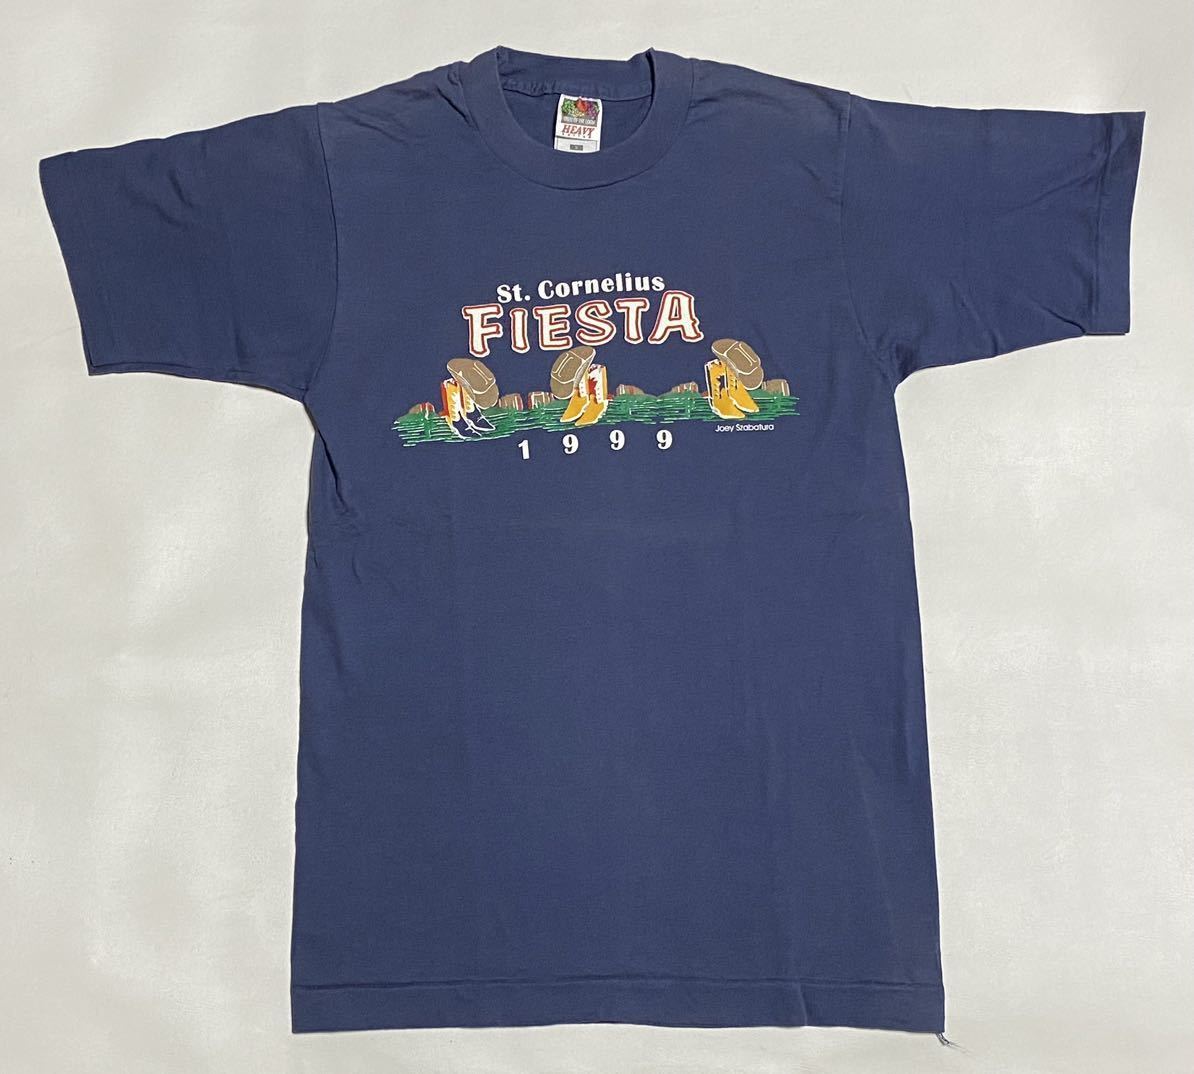 90's FRUIT OF THE LOOM St.Cornelius FIESTA 1999 プリントTシャツ Sサイズ ビUSA製 ビンテージ古着 90年代 ウエスタン vintage 80's